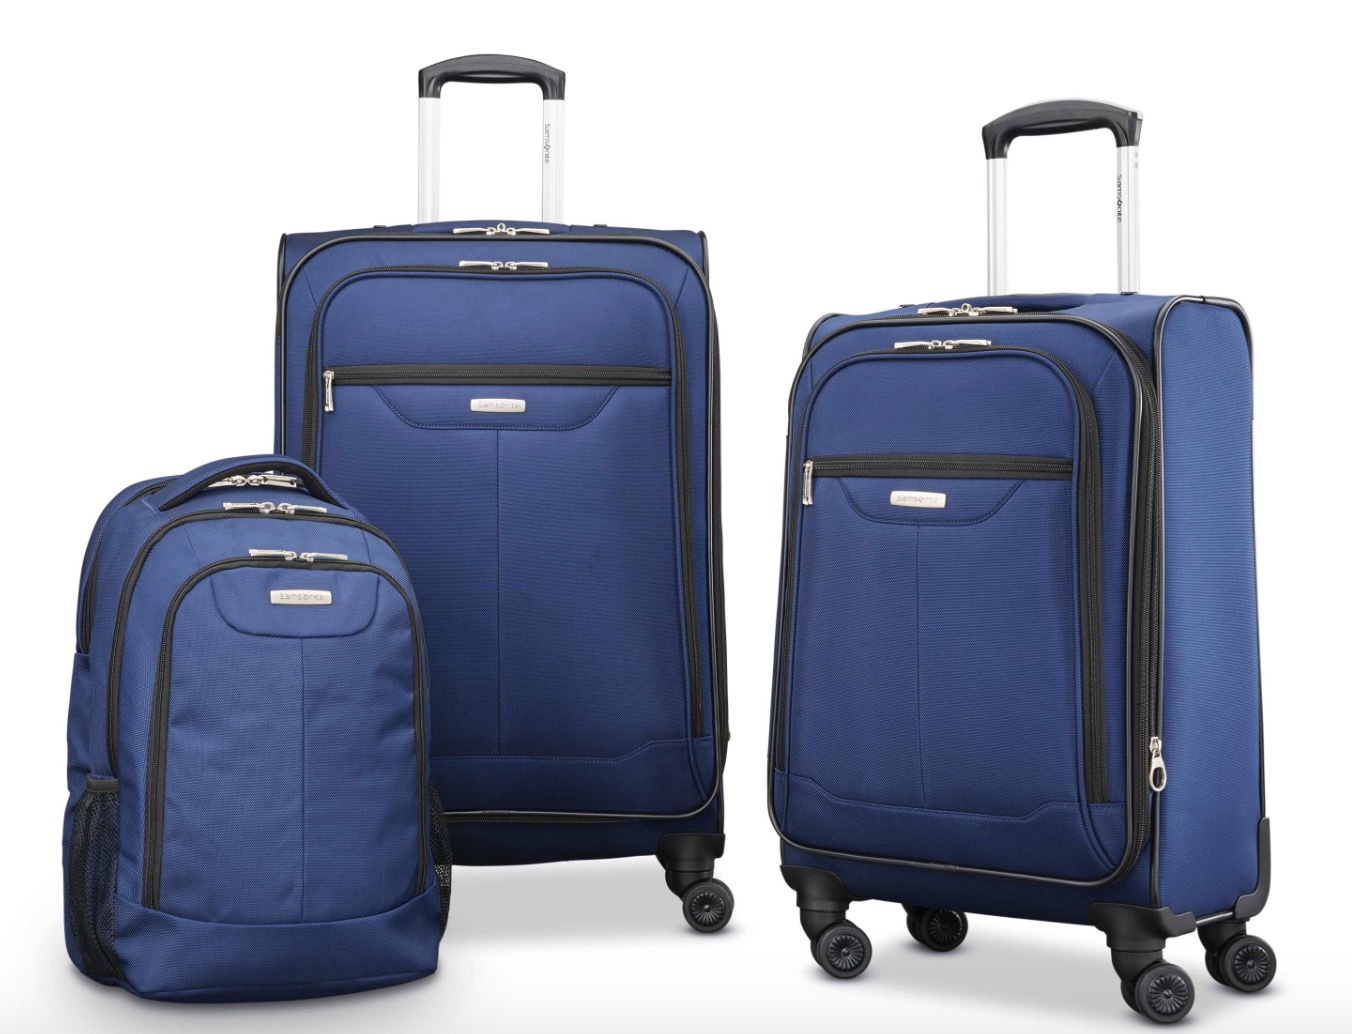 Samsonite Tenacity 3-Piece Luggage Spinner Set $76.49 (Reg. $300)